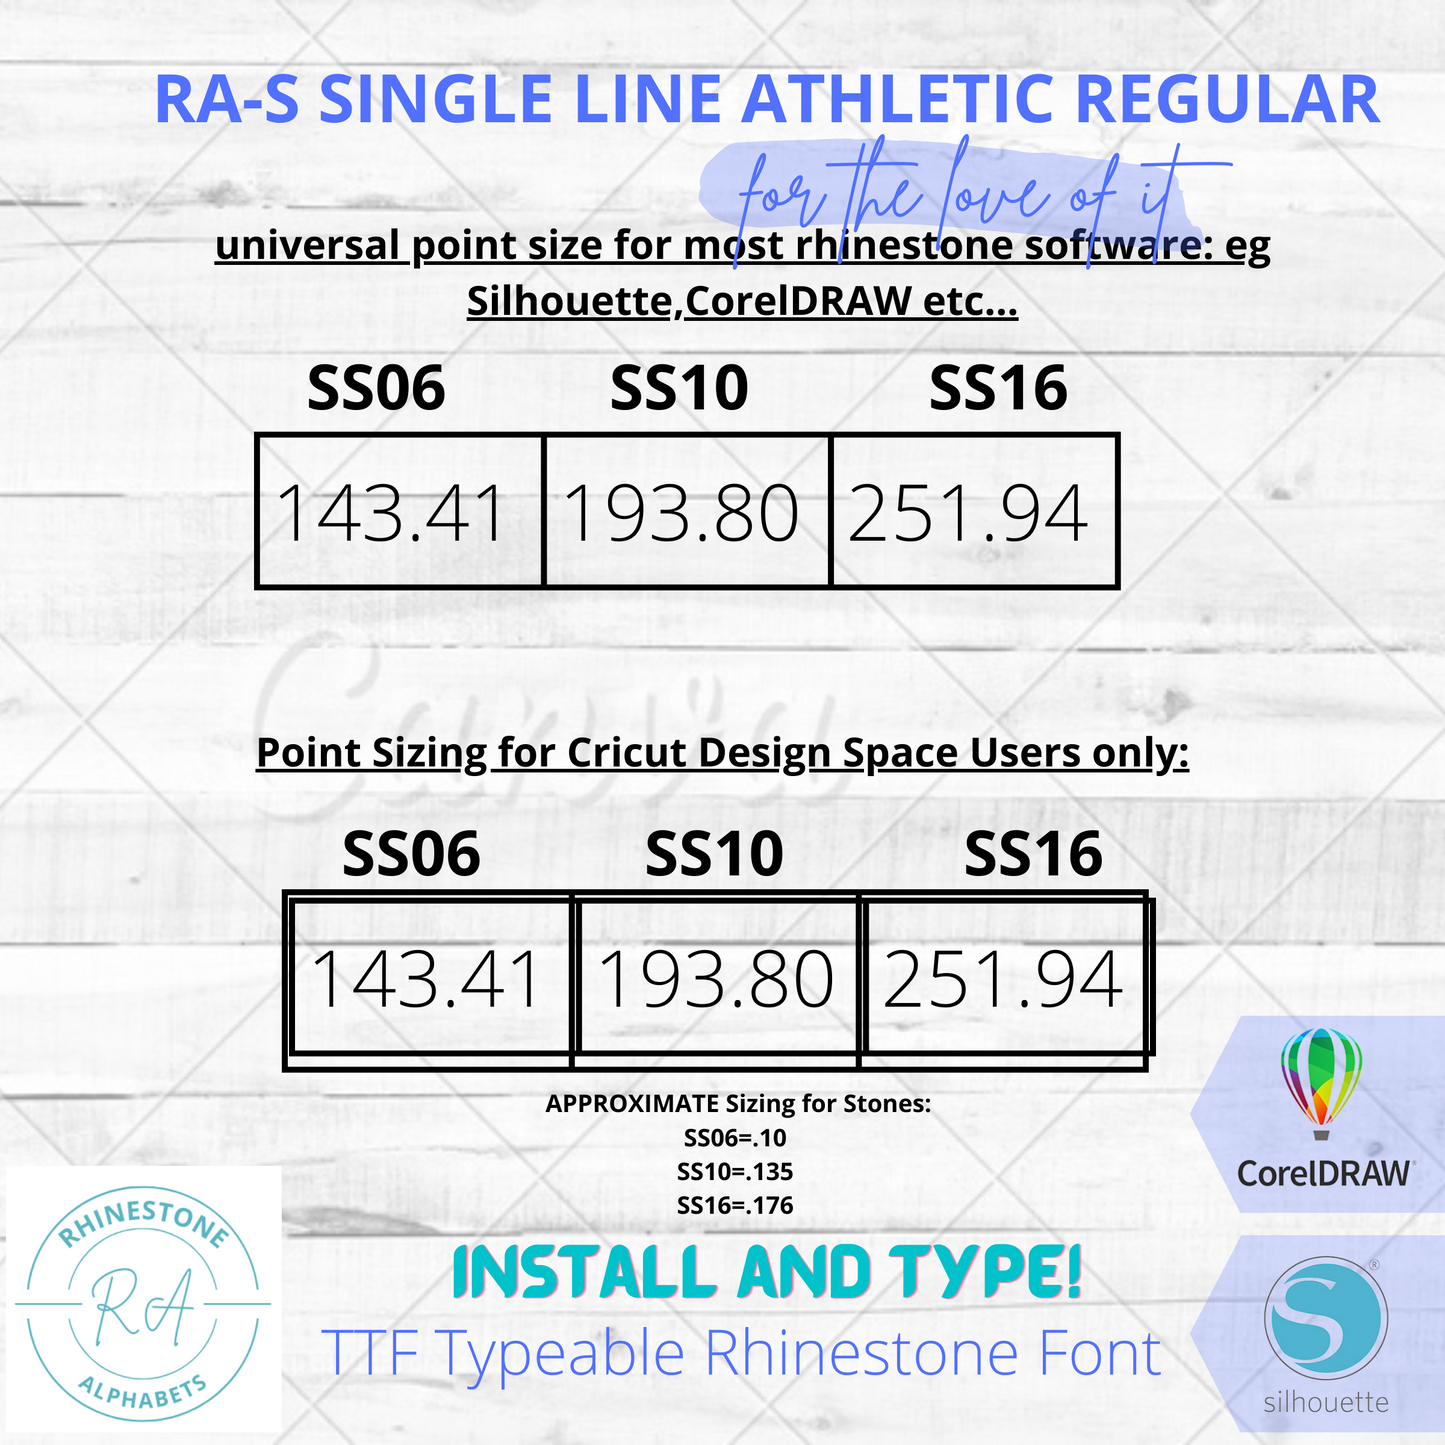 RA-S Singleline Athletic Regular